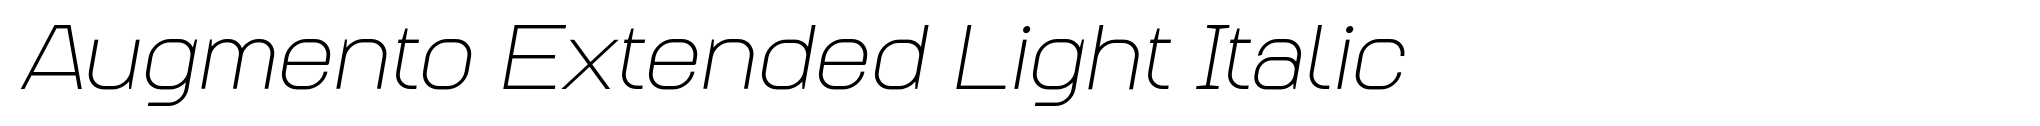 Augmento Extended Light Italic image